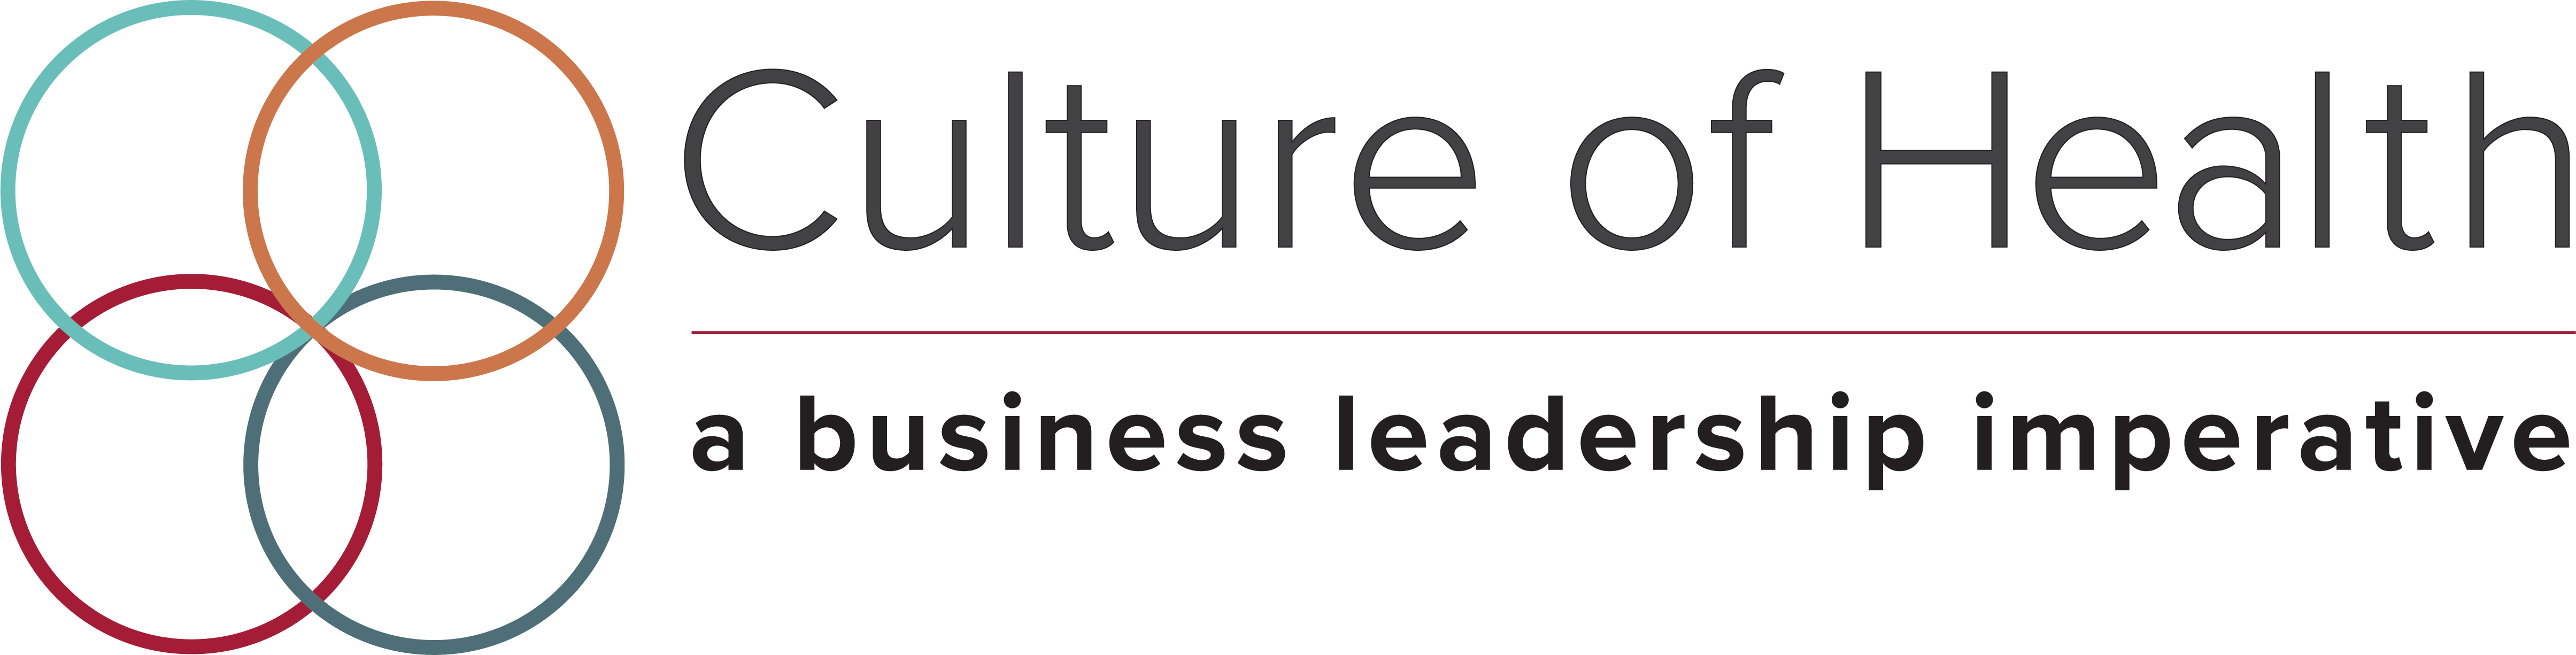 culture of health logo